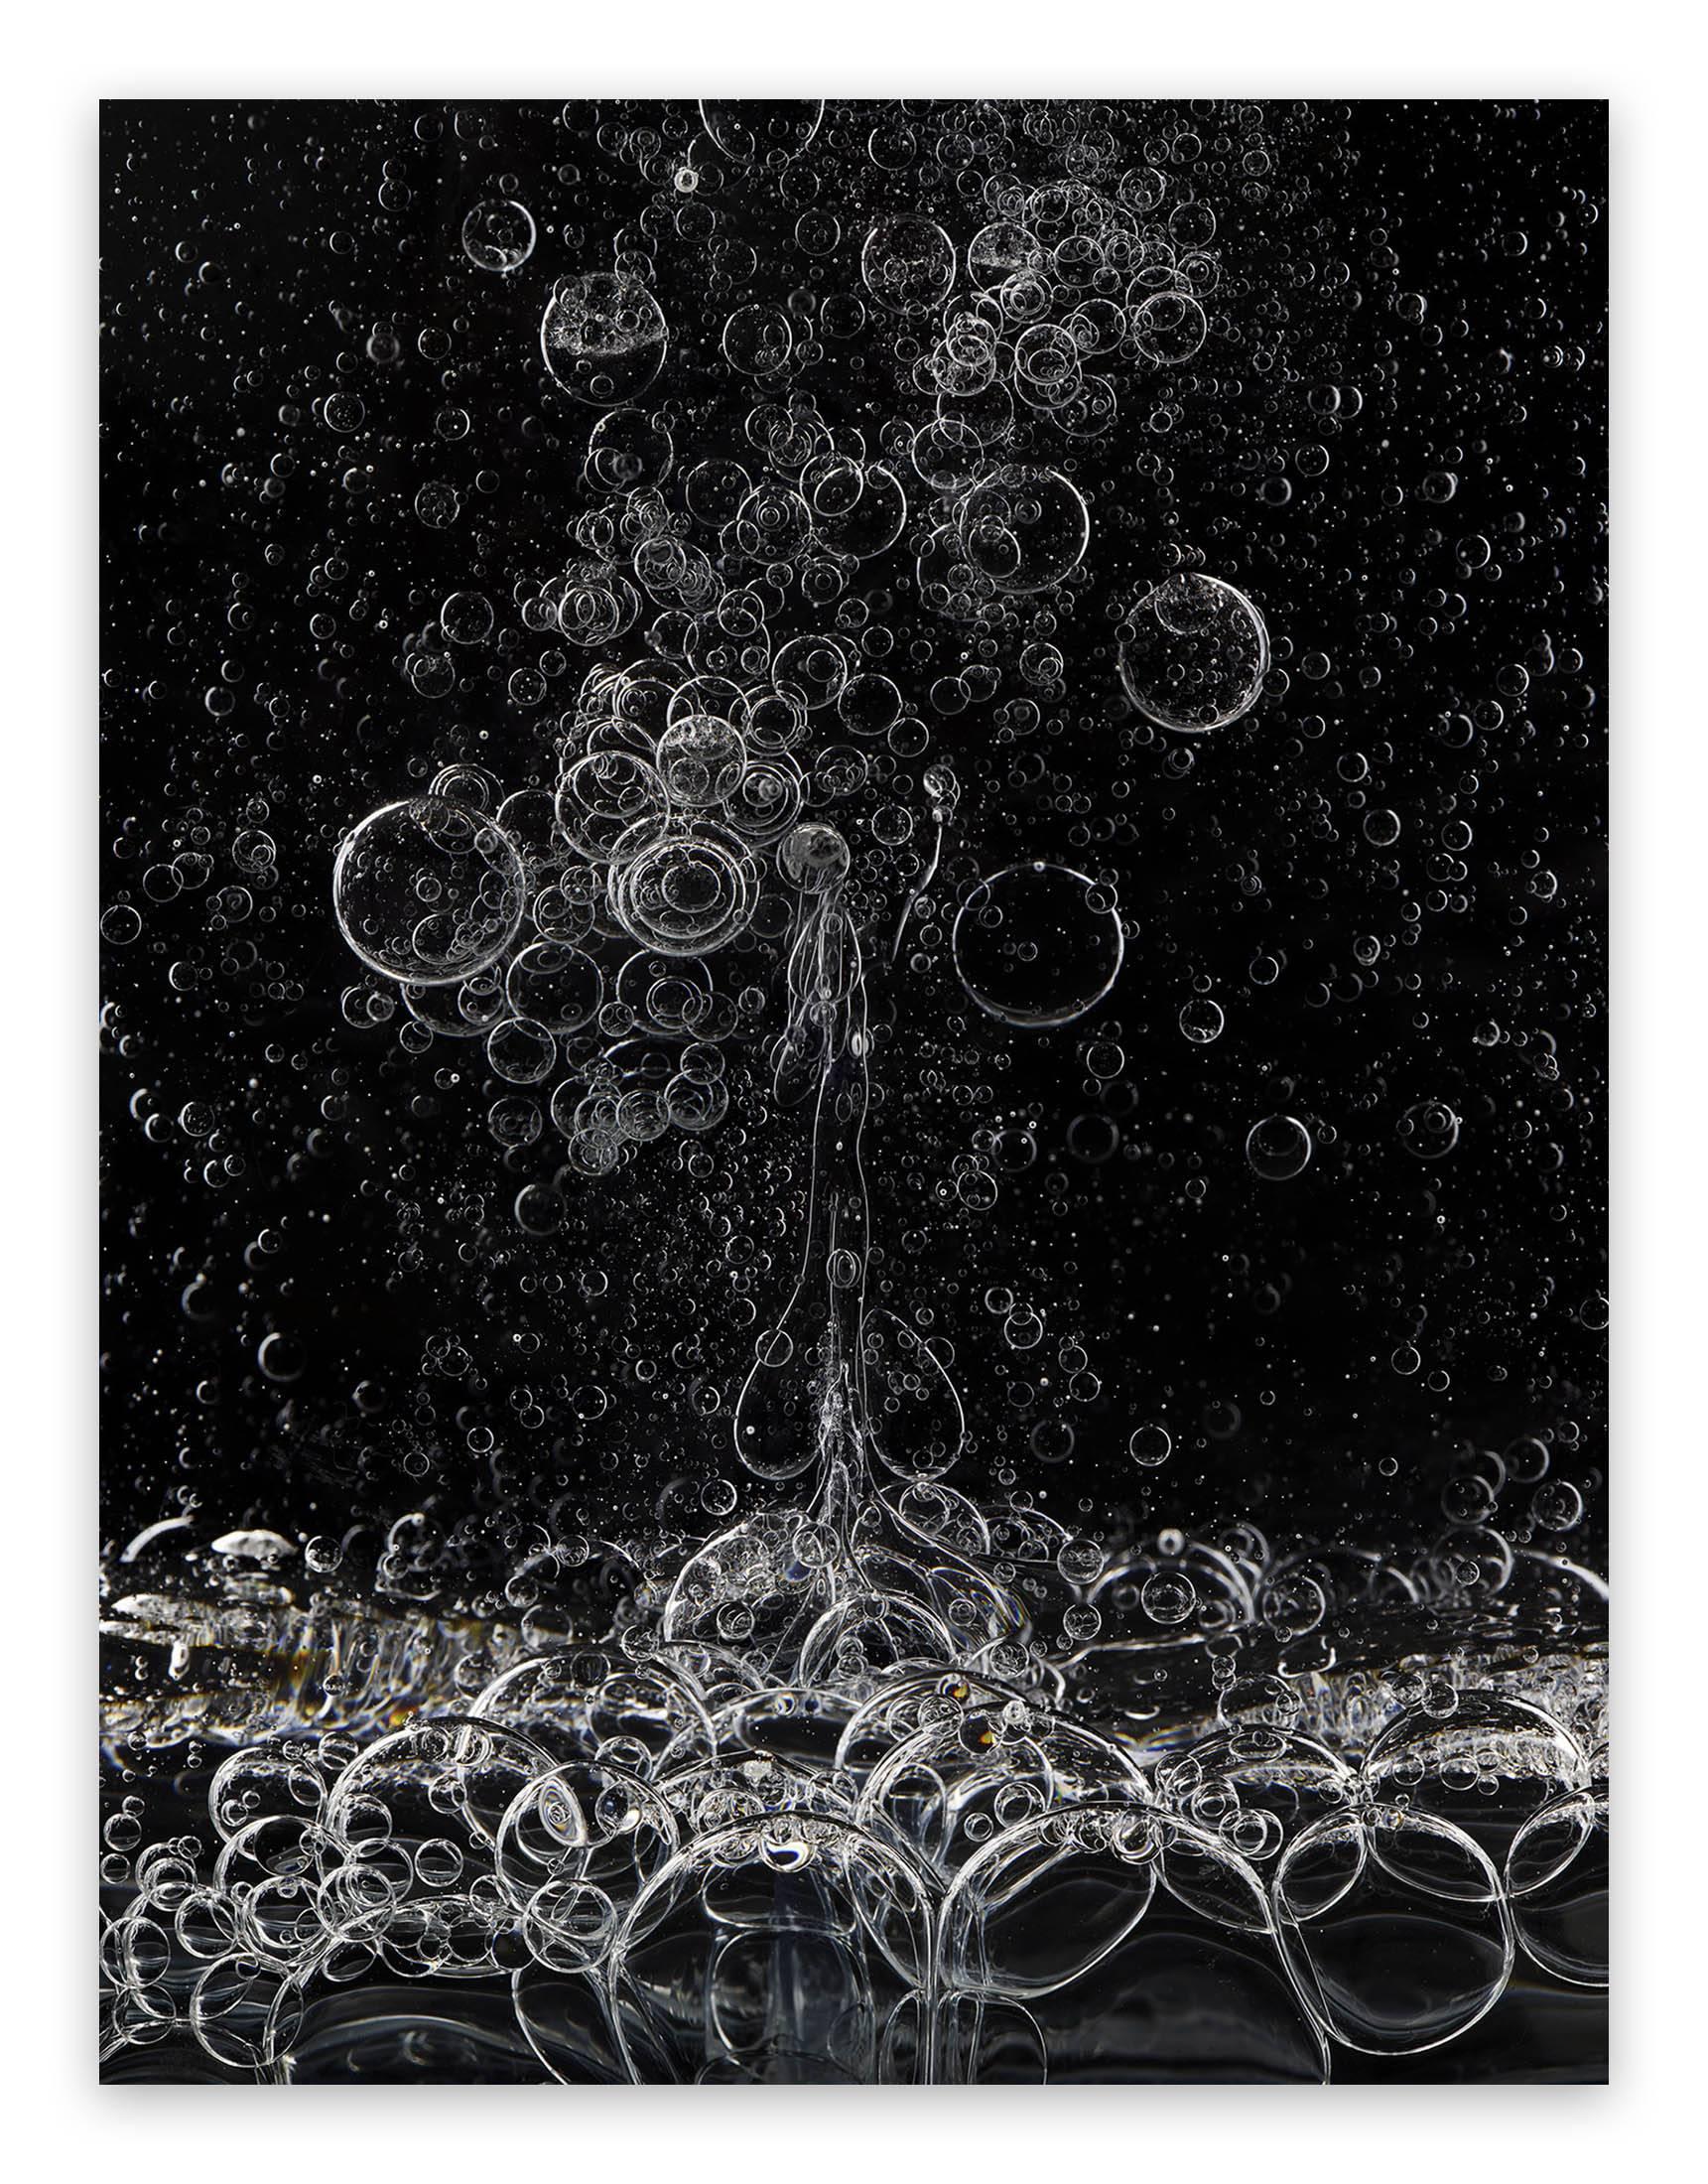 Seb Janiak Black and White Photograph - Gravity - Liquid 21 (Abstract Photography)